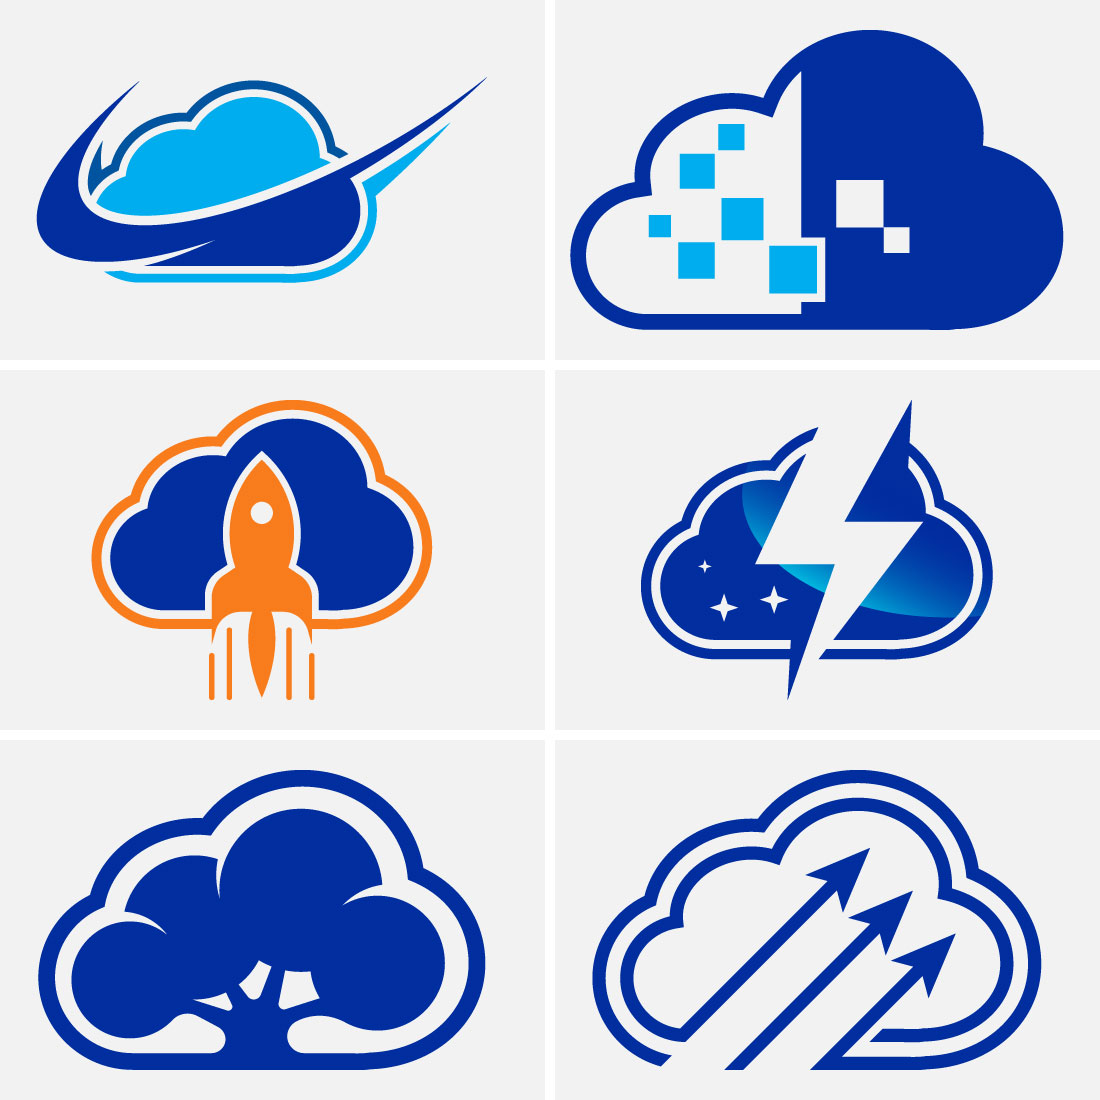 Cloud Computing Provider Service Logo cover image.